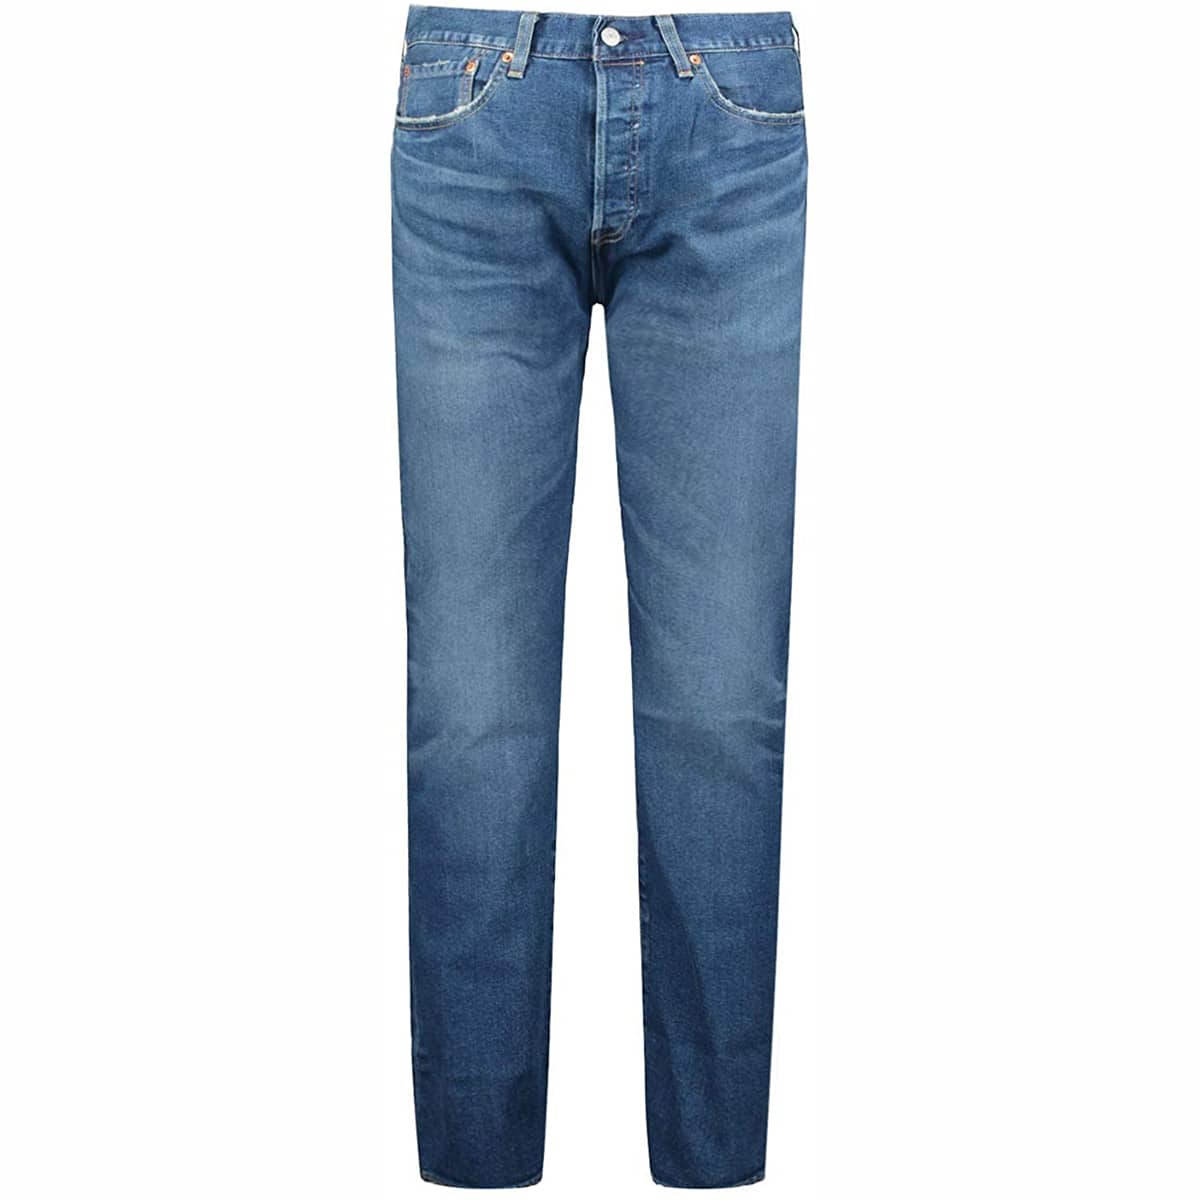 Pantalon Jeans Levi’s 501 Key West Sky Tnl